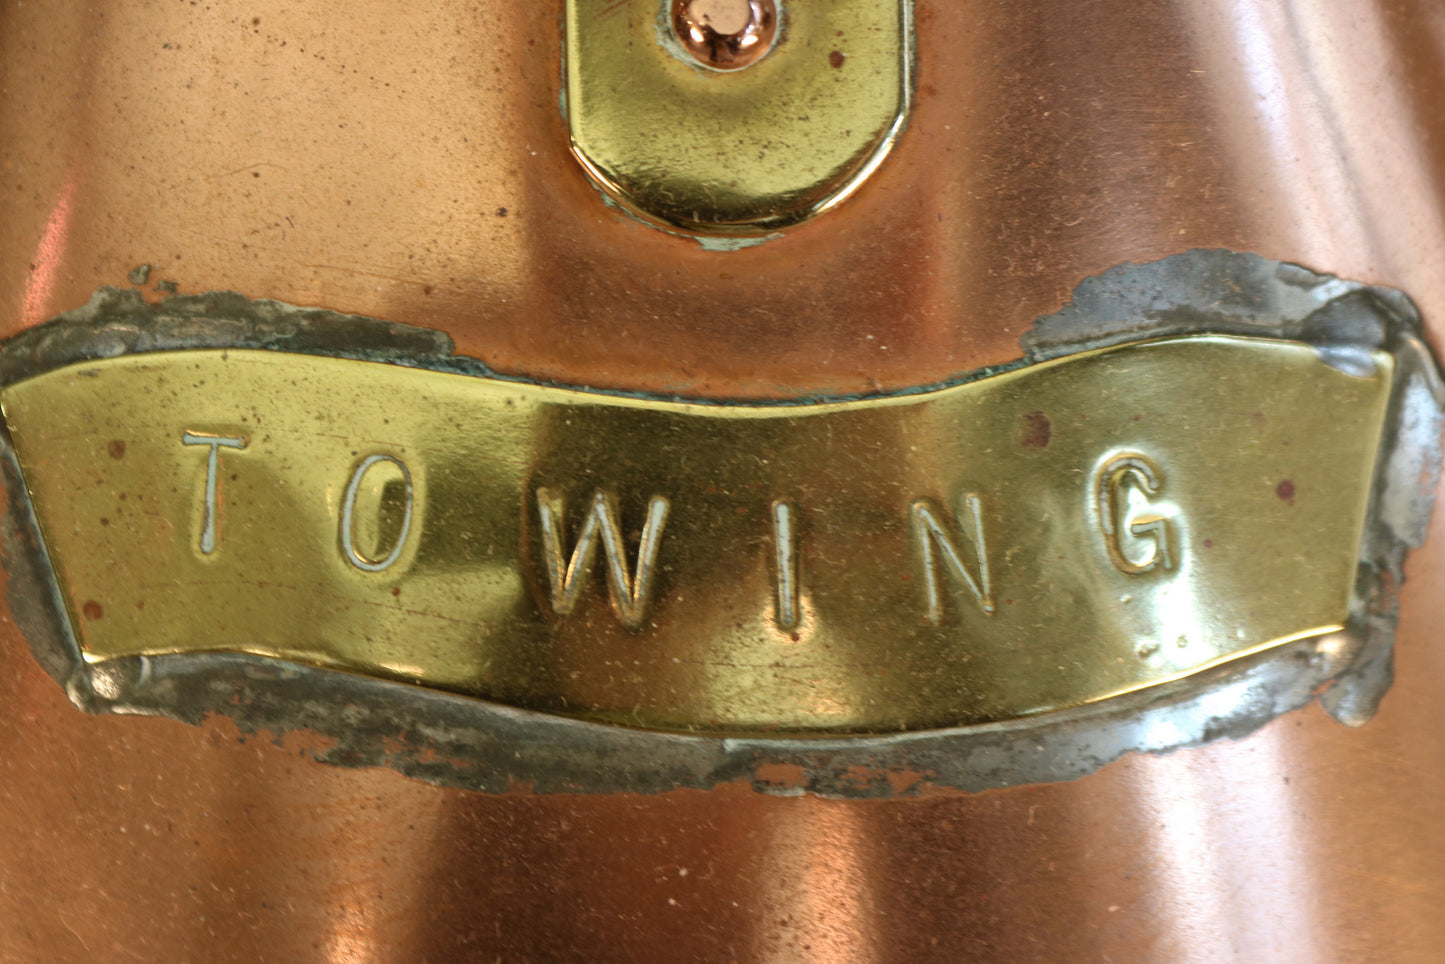 Copper Masthead "Towing" Lantern - Lannan Gallery